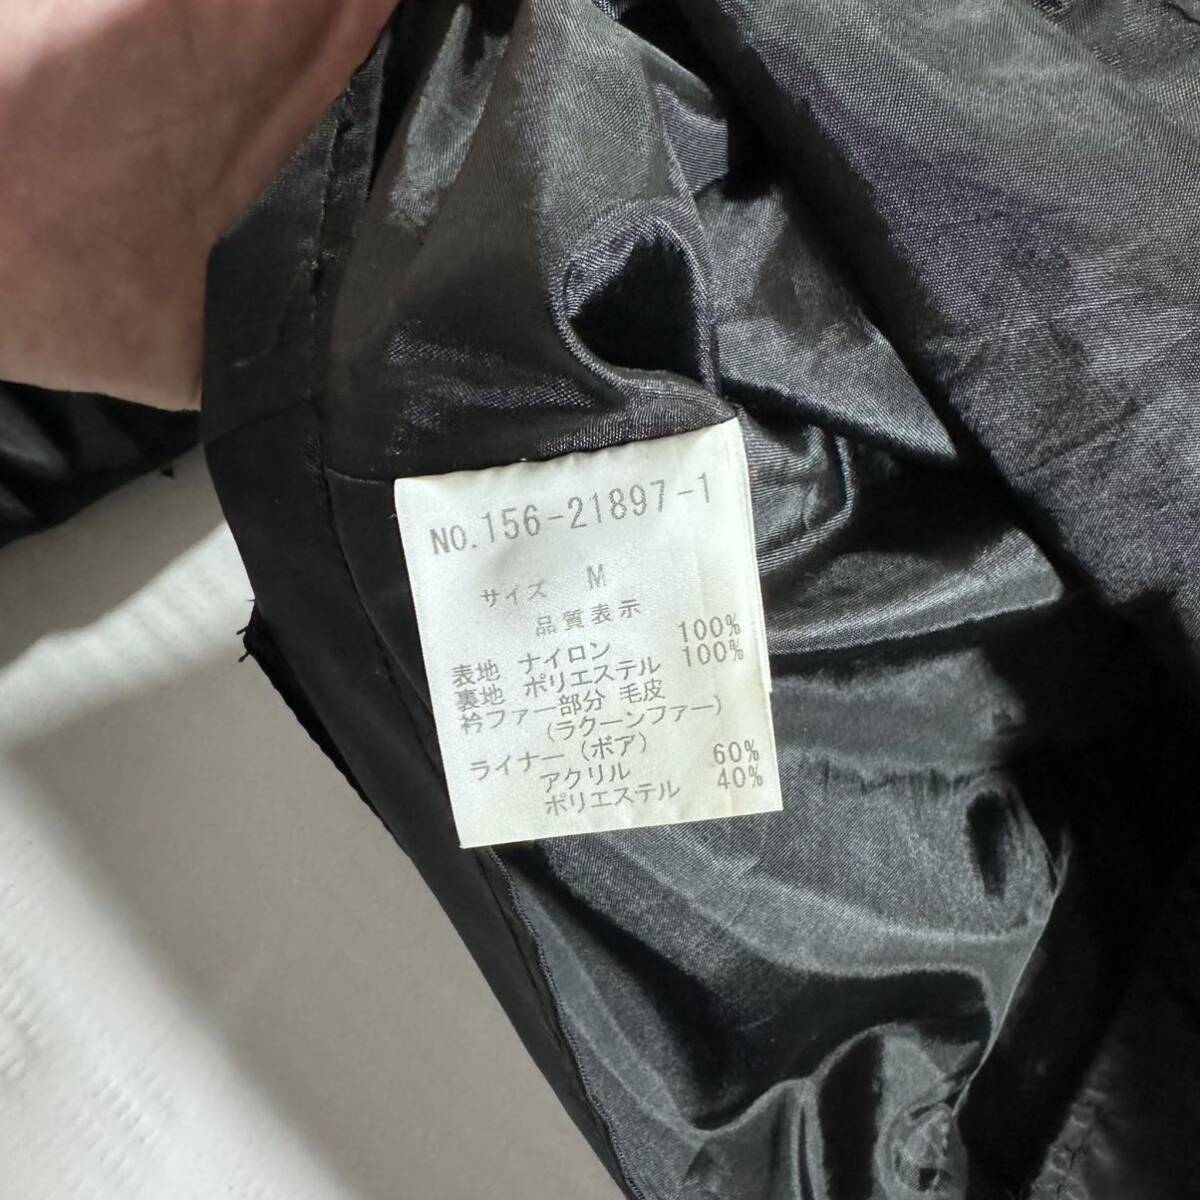 Rare Japanese Label Y2K gimmick jacket 14th addiction share spirit ifsixwasnine civarize lgb goa kmrii archive obelisk 00s gunda